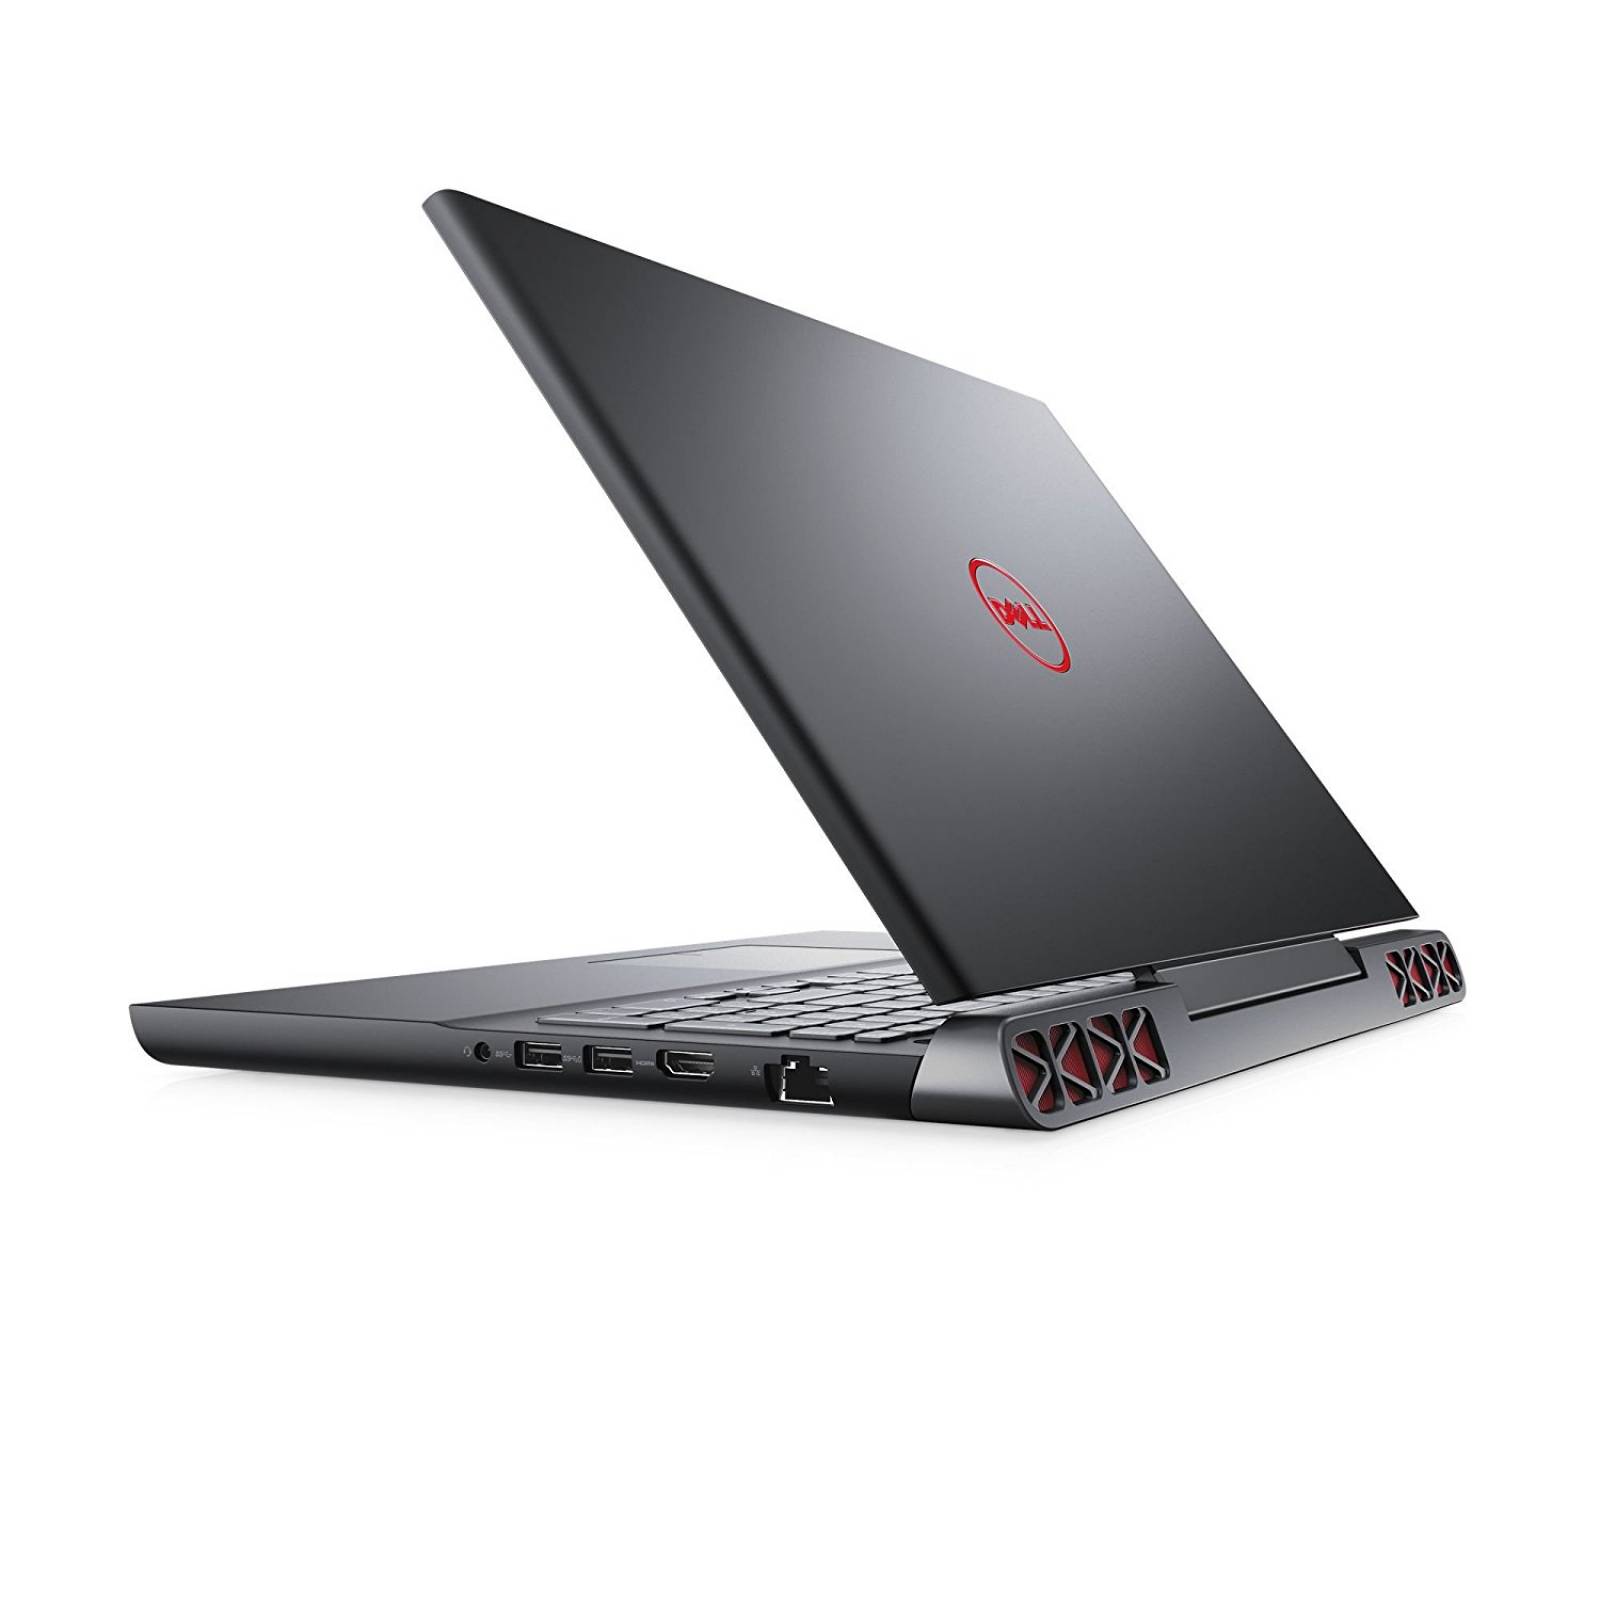 Laptop Gamer Dell Inspiron 15 7567 I5 8gb 256gb Gtx 1050ti